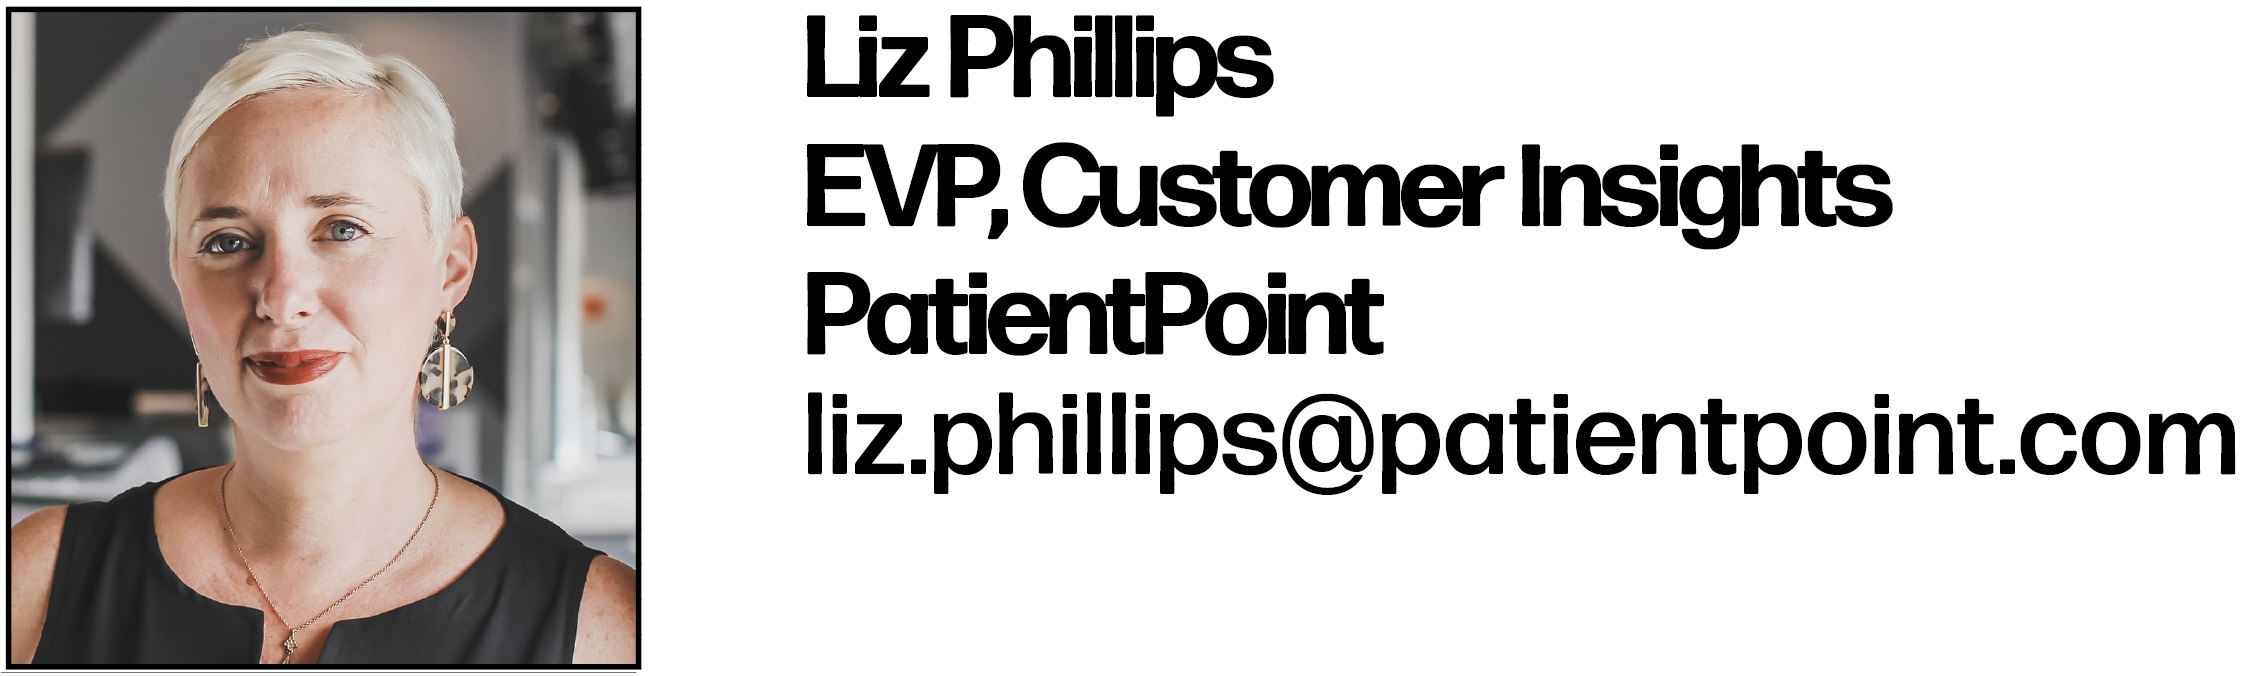 Liz Phillips EVP, Customer Insights PatientPoint liz.phillips@patientpoint.com